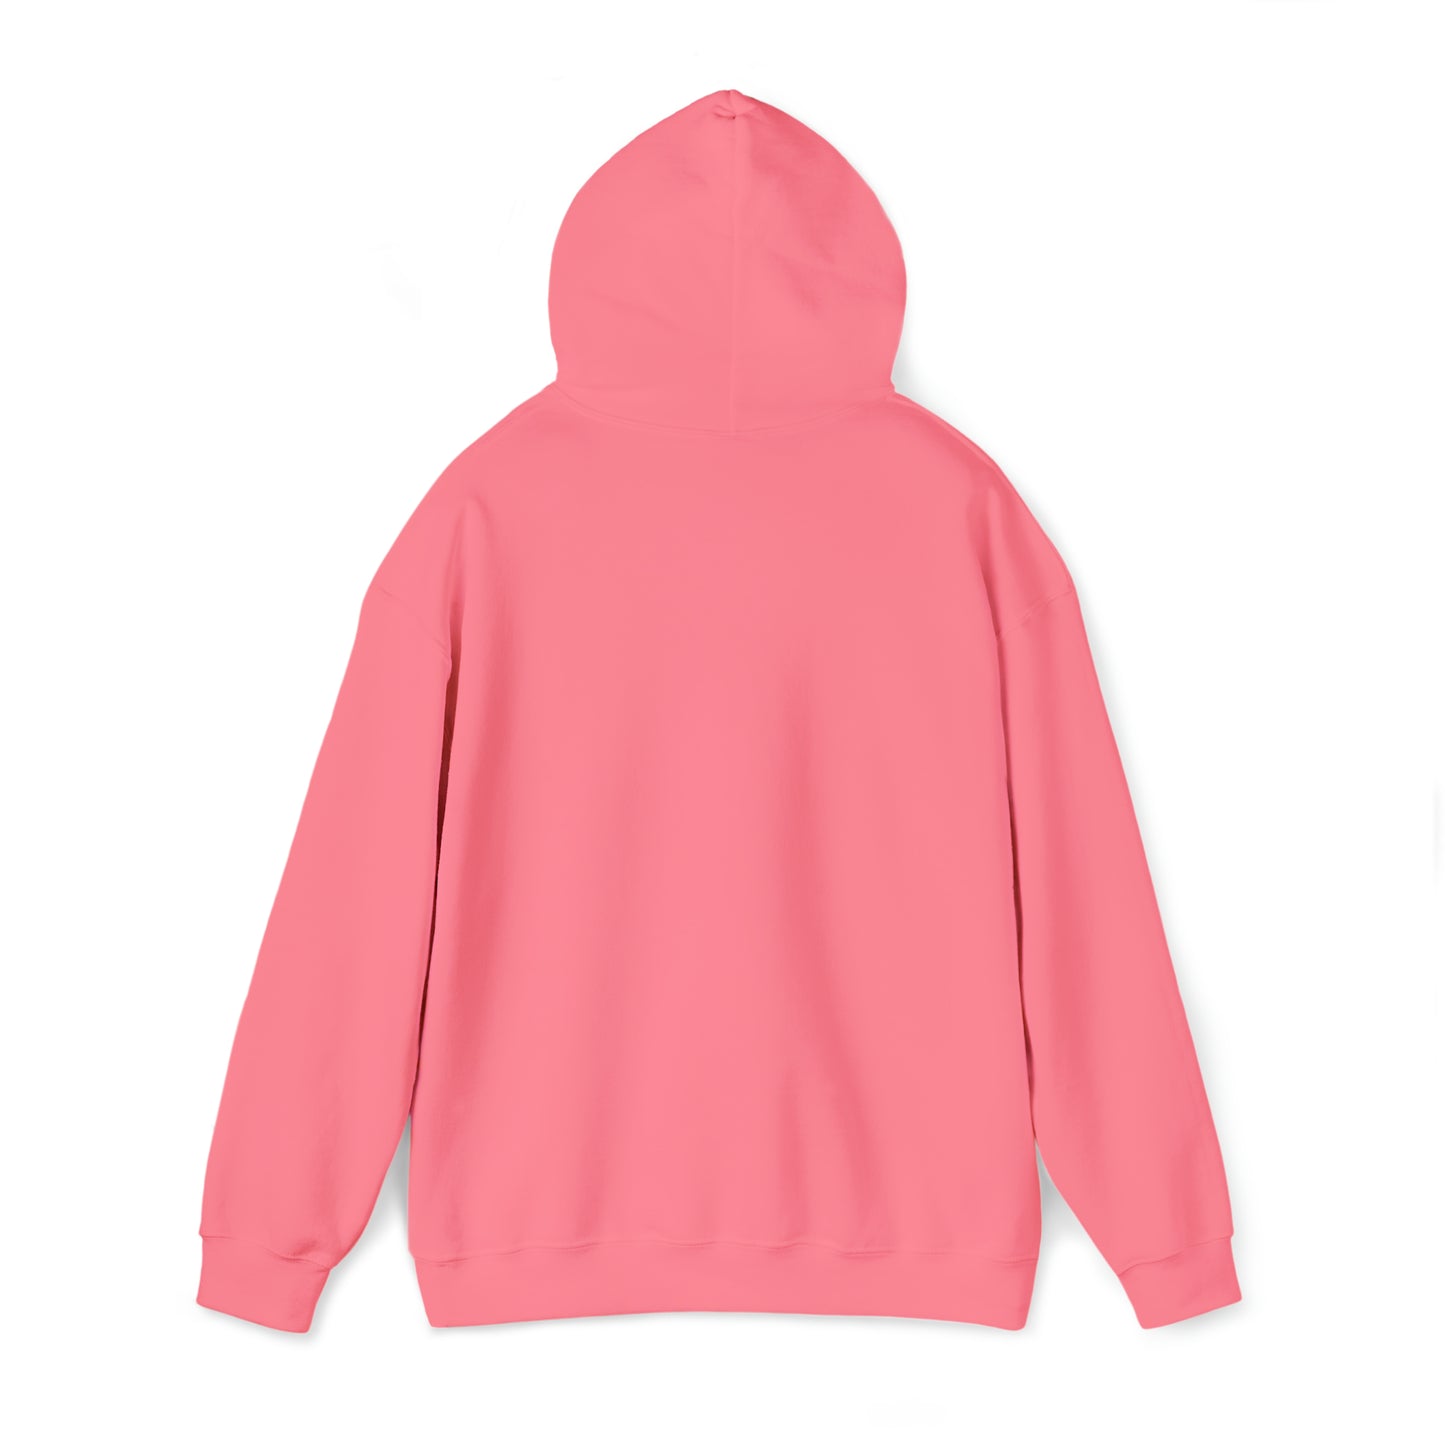 YOGA Unisex Heavy Blend™ Hooded Sweatshirt